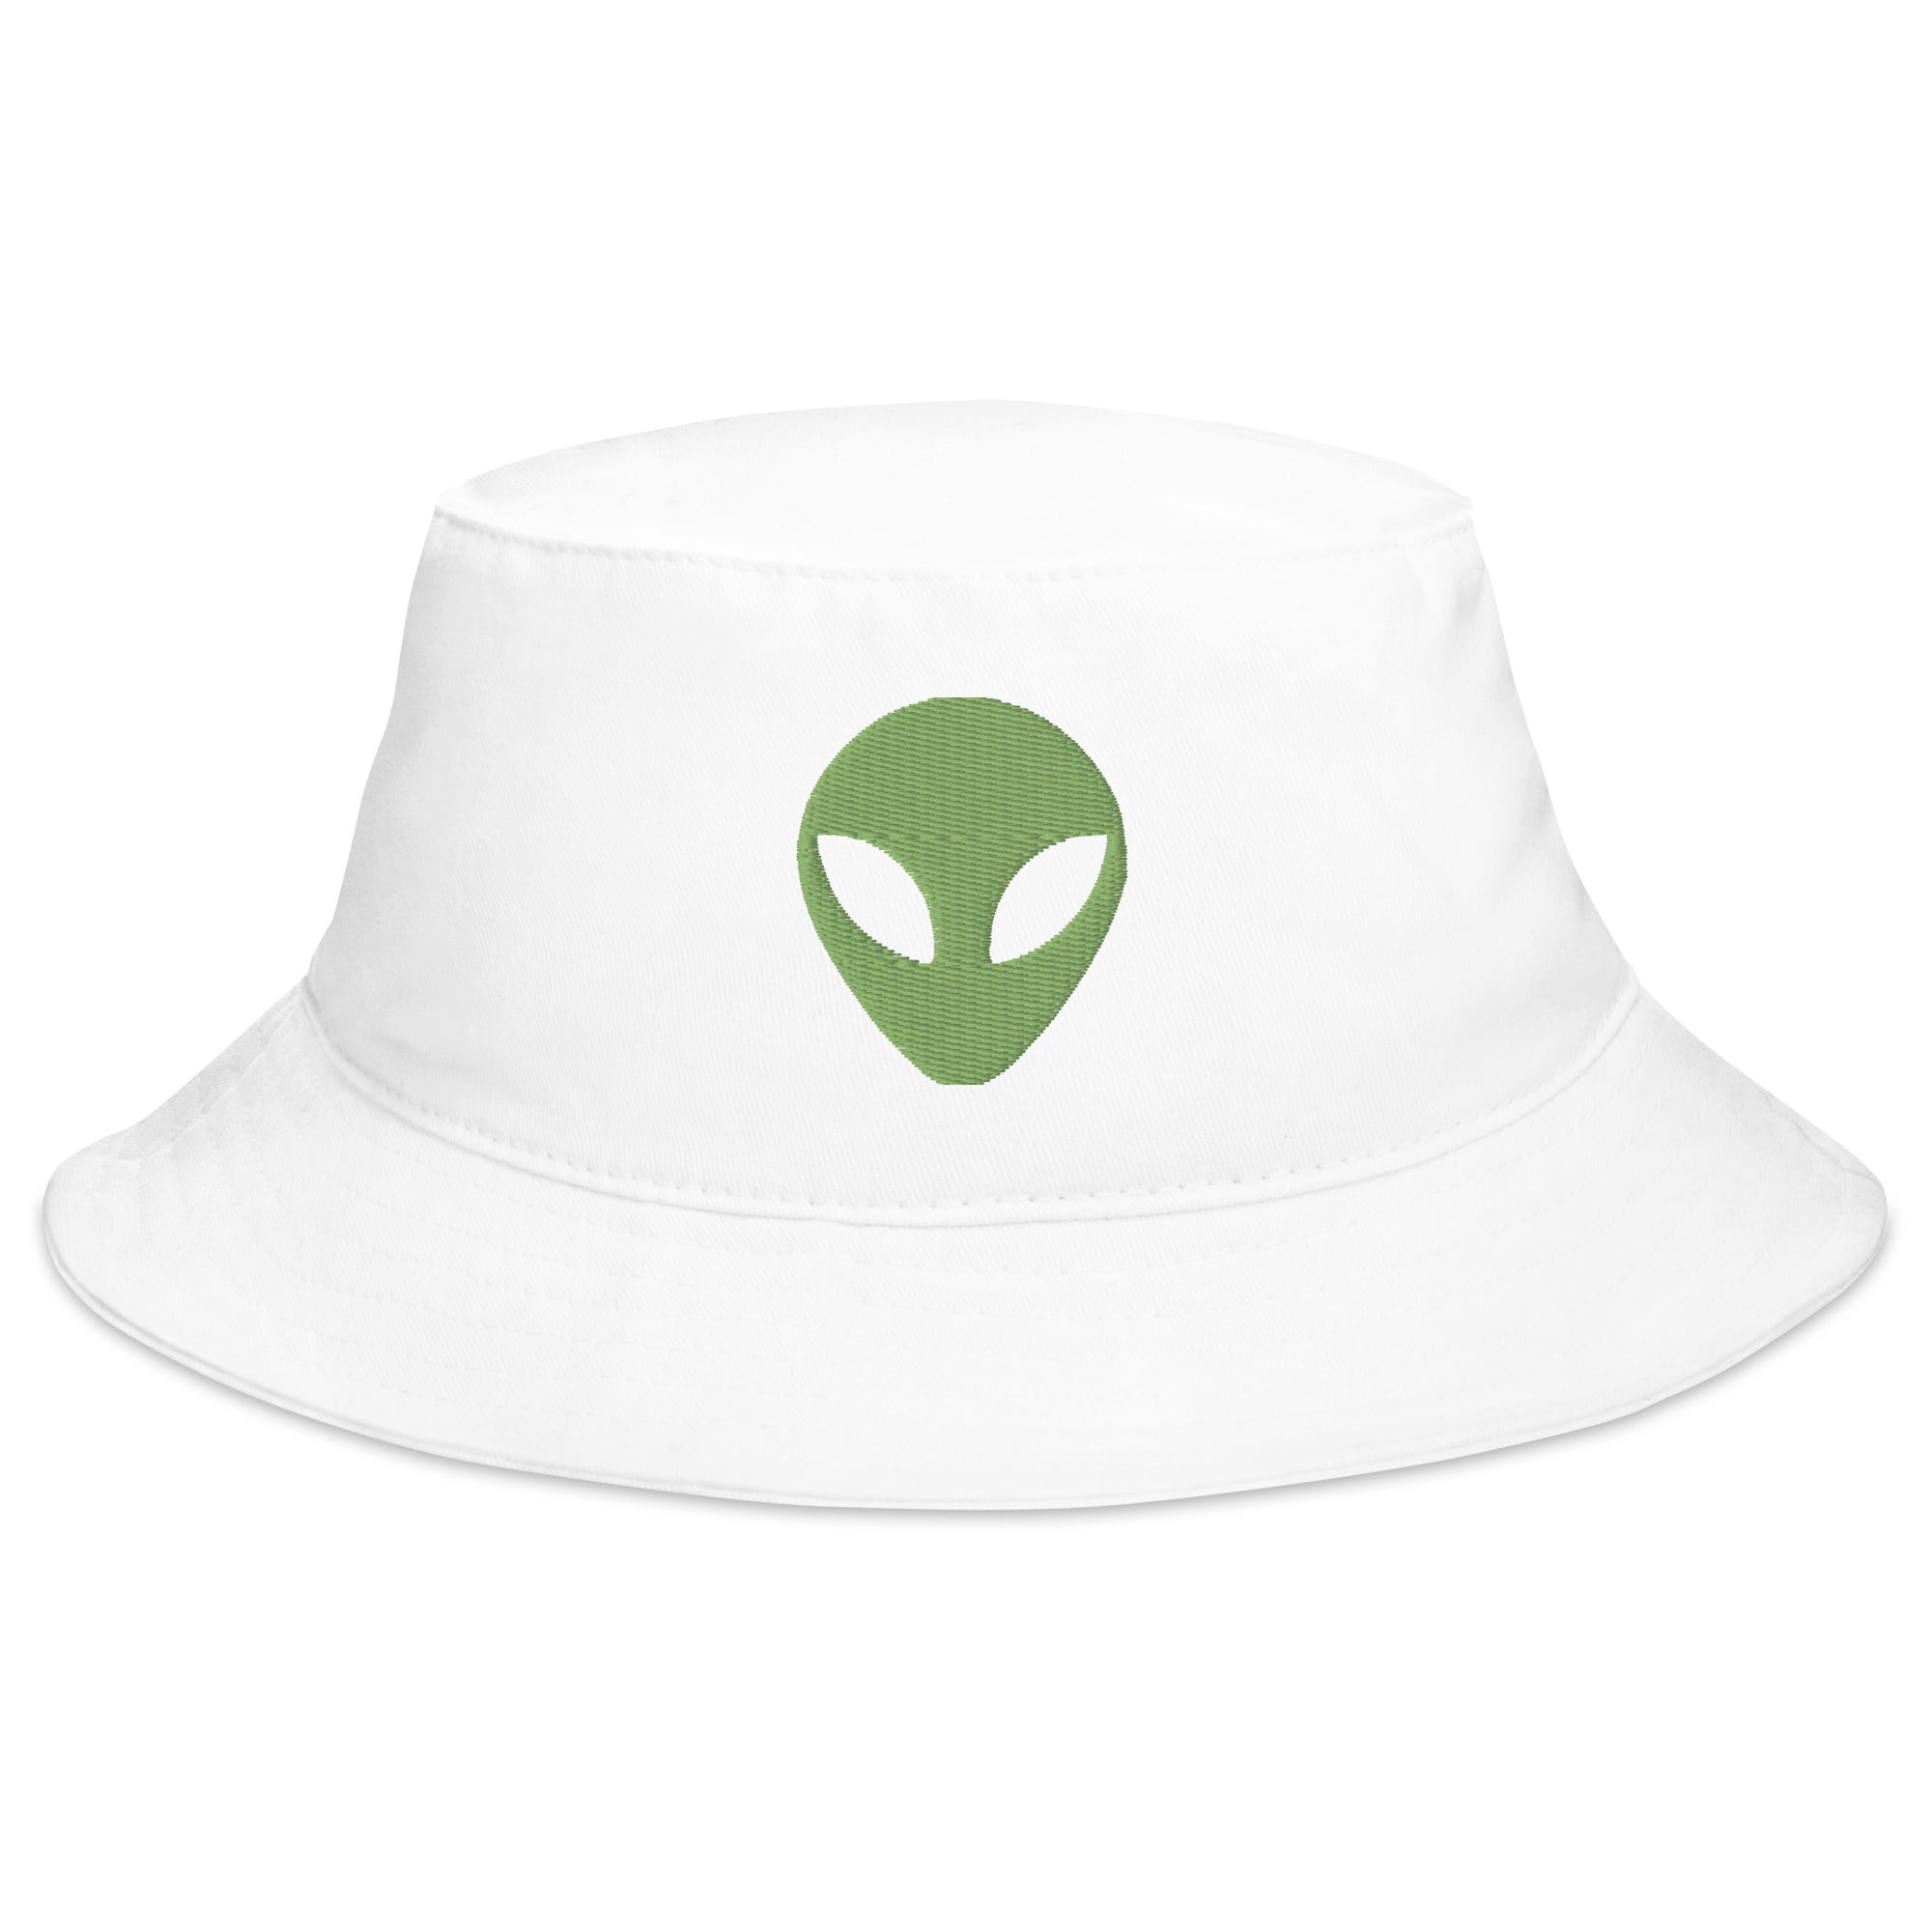 Alien Face Little Green Men Embroidered Bucket Hat Space Invader